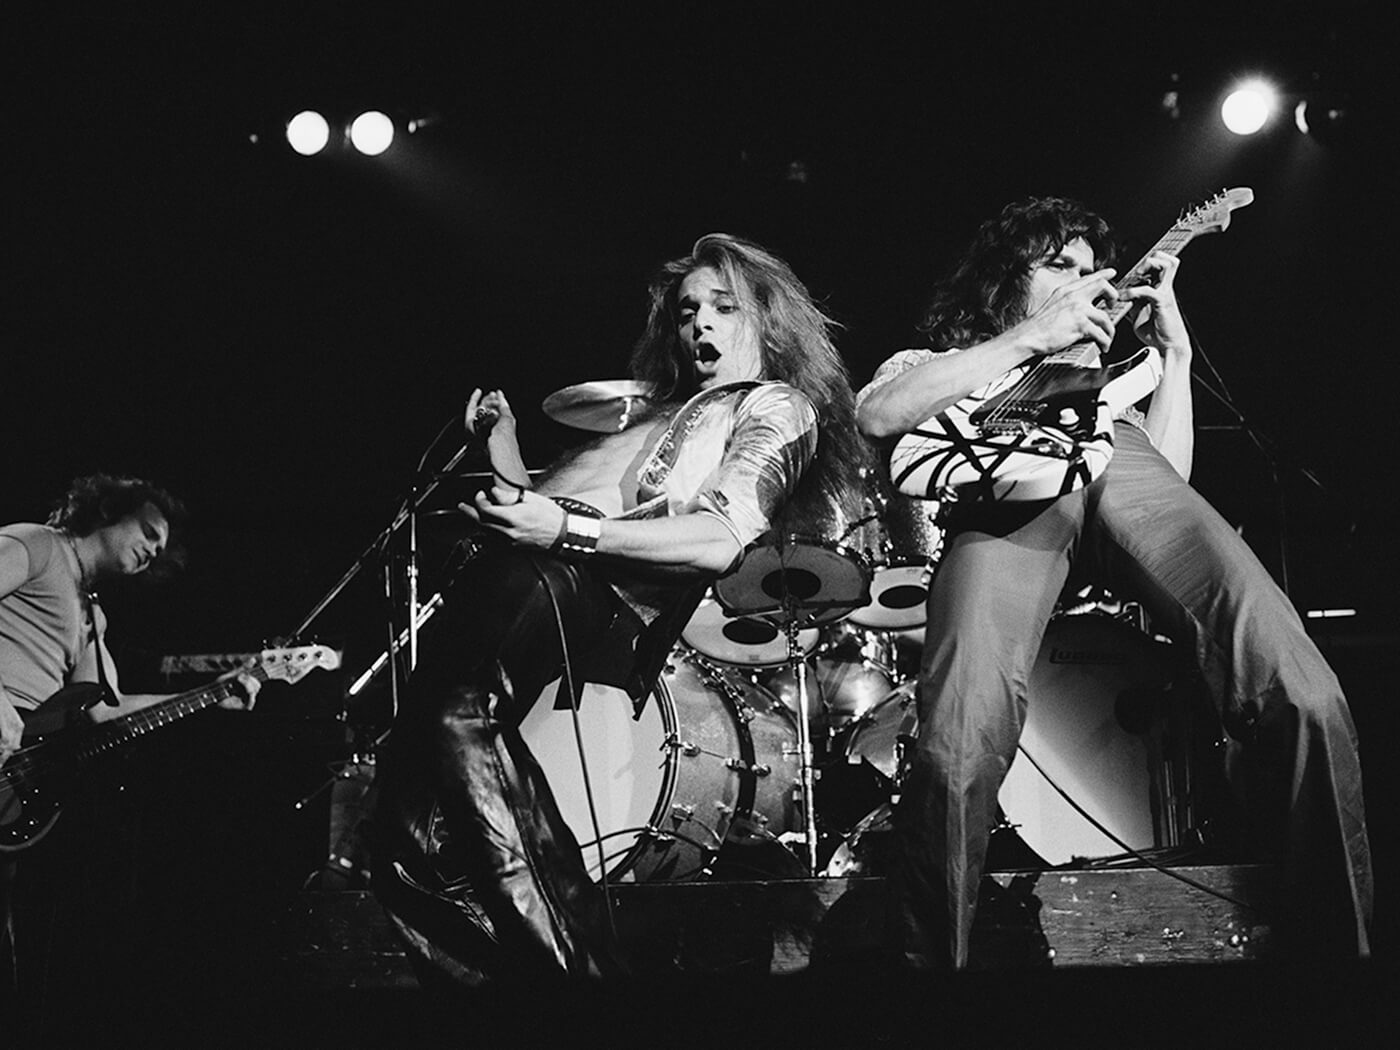 Michael Anthony, David Lee Roth and Eddie Van Halen of Van Halen performing onstage in 1978, photo by Fin Costello/Redferns via Getty Images